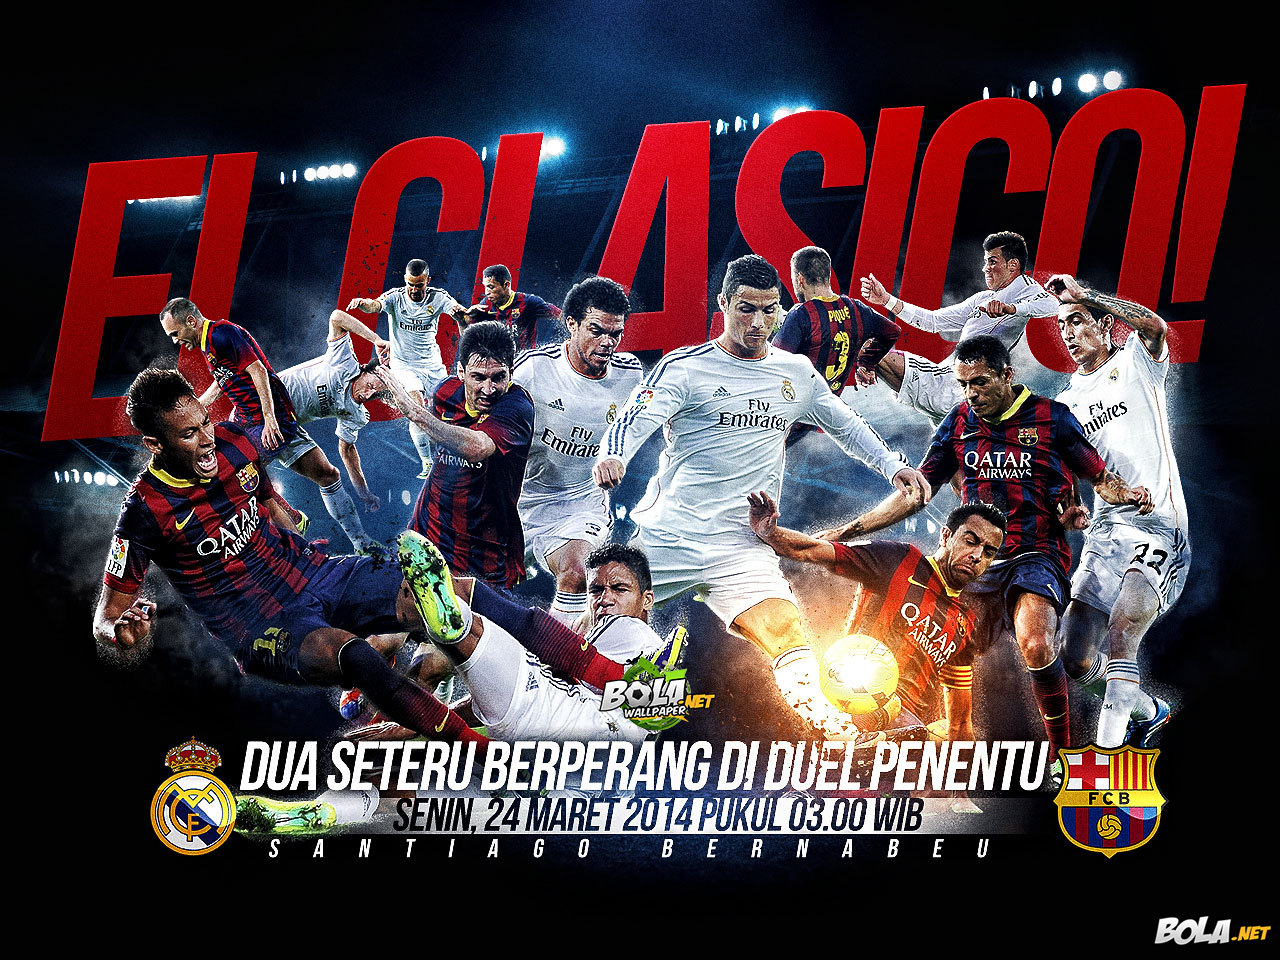 Download Wallpaper Real Madrid Vs Barcelona Bolanet